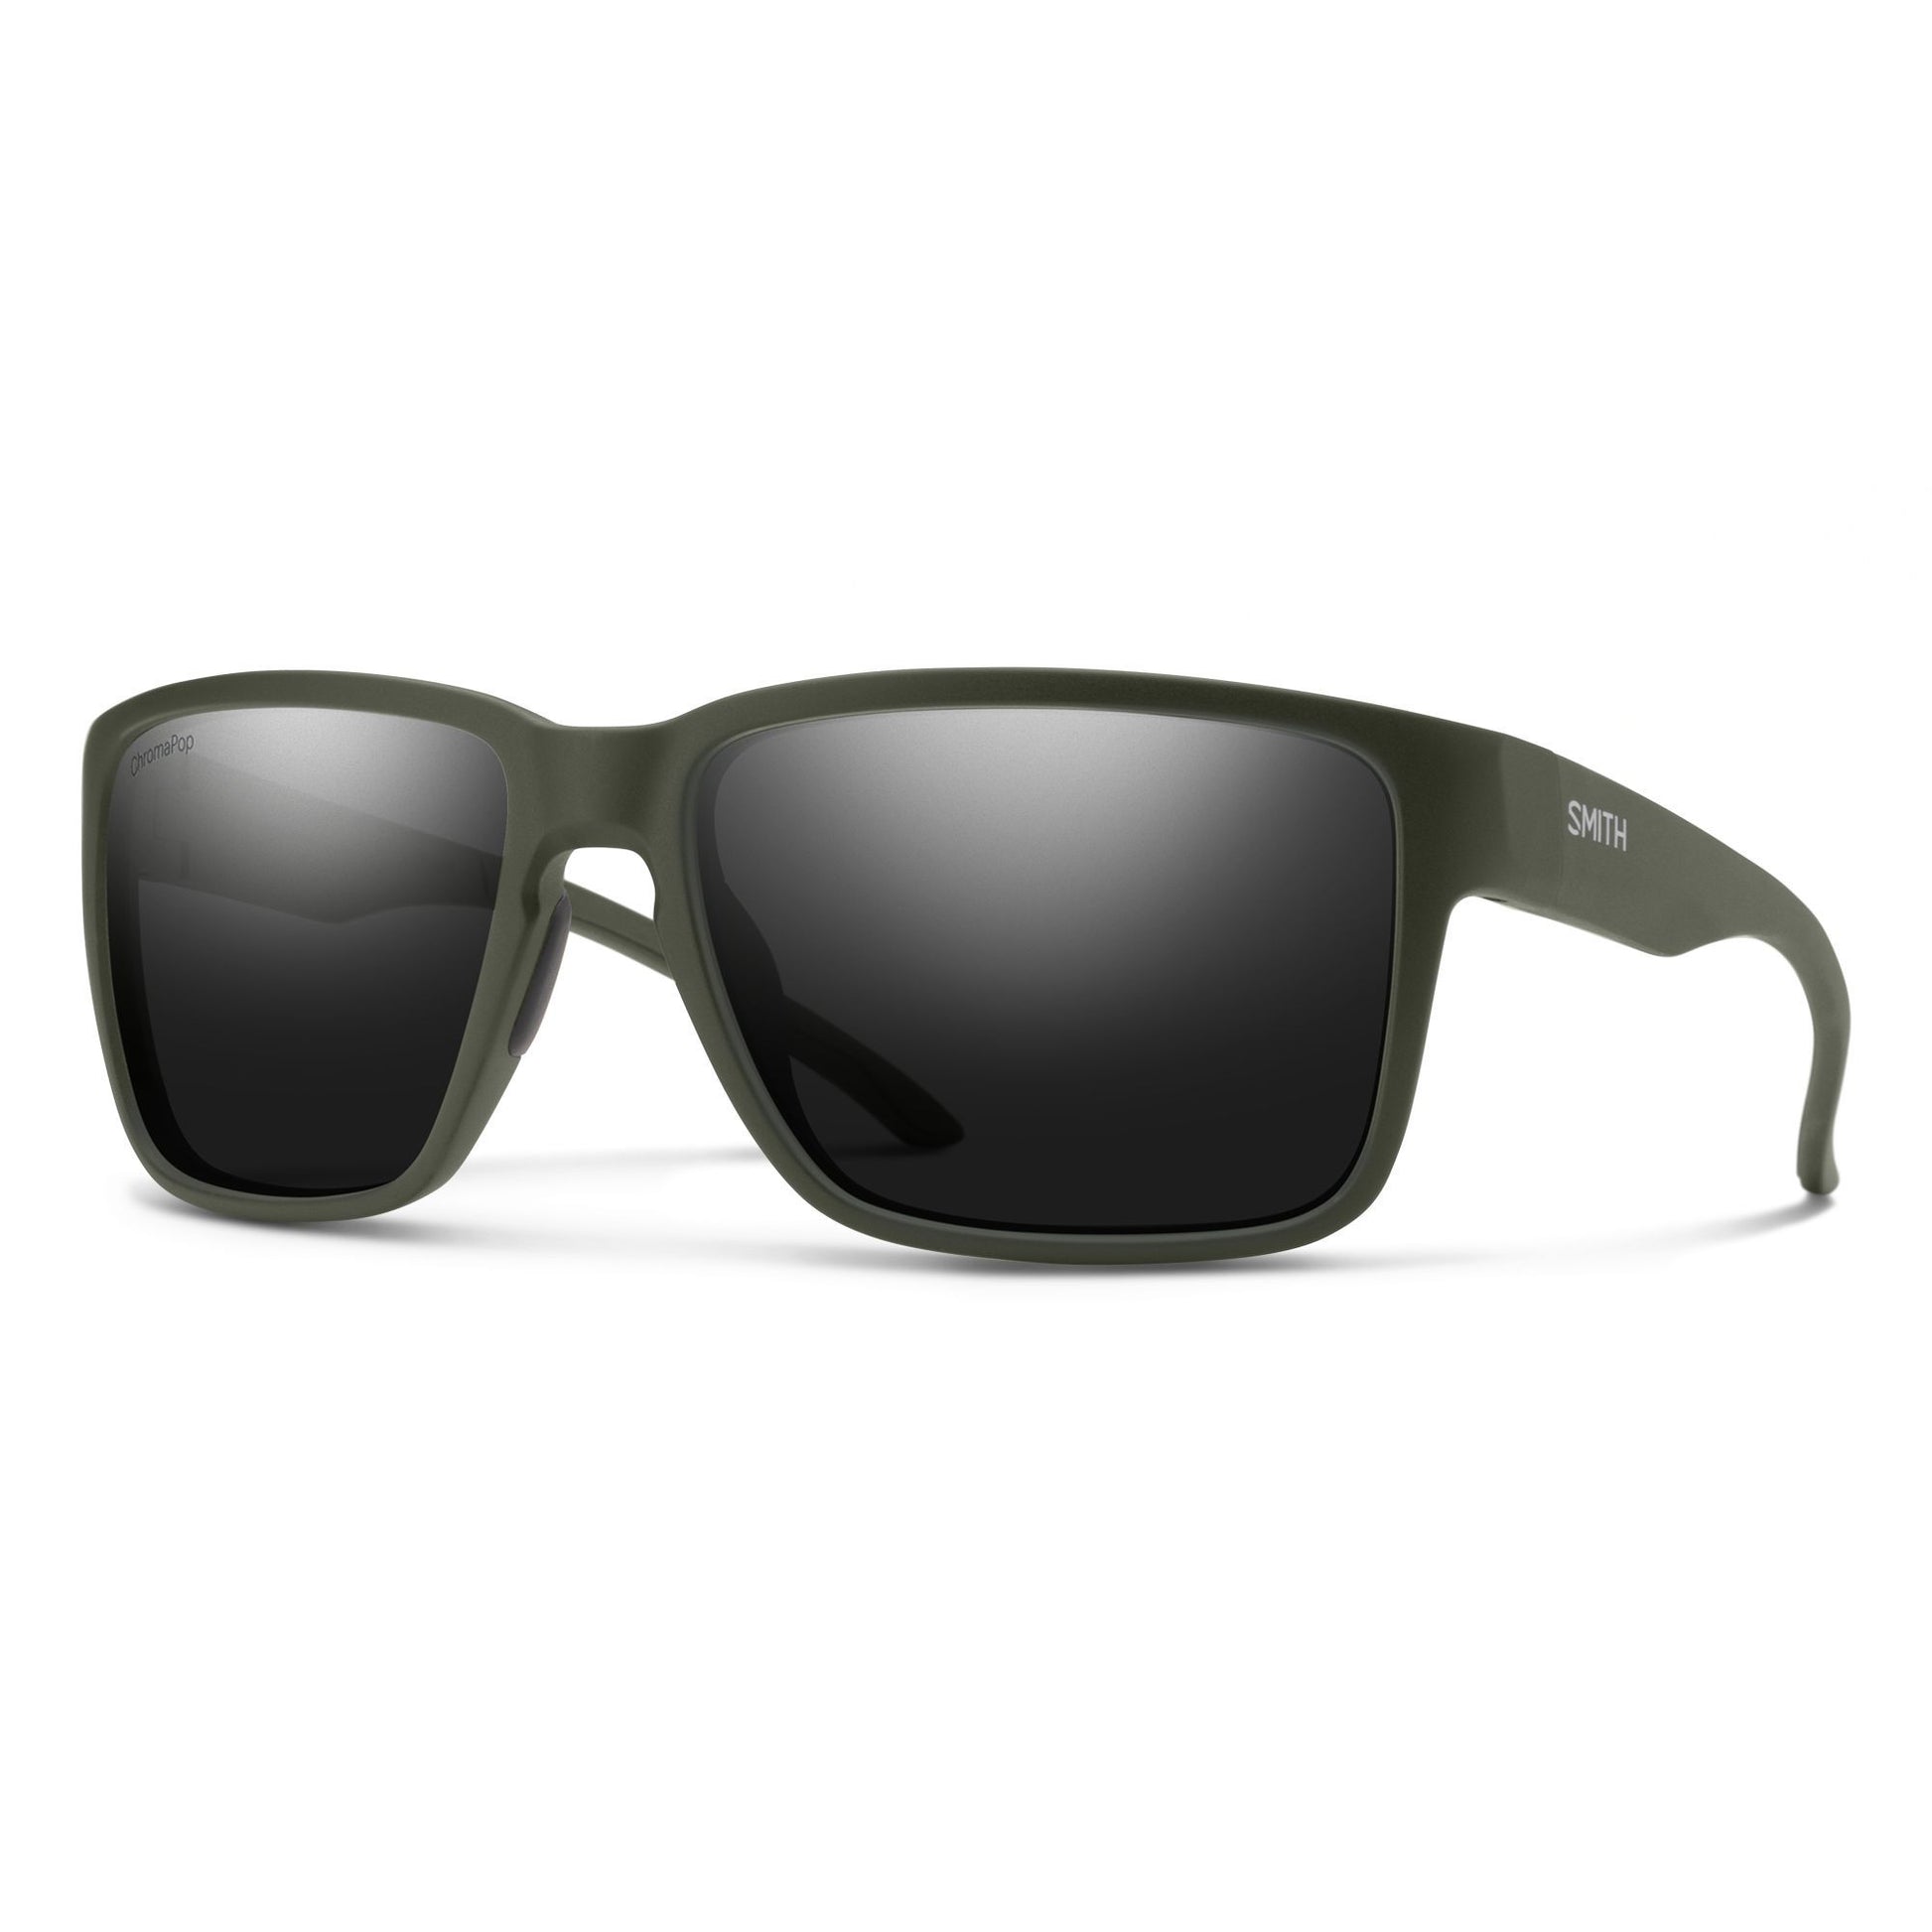 Smith Emerge Sunglasses Matte Moss / ChromaPop Polarized Black Sunglasses